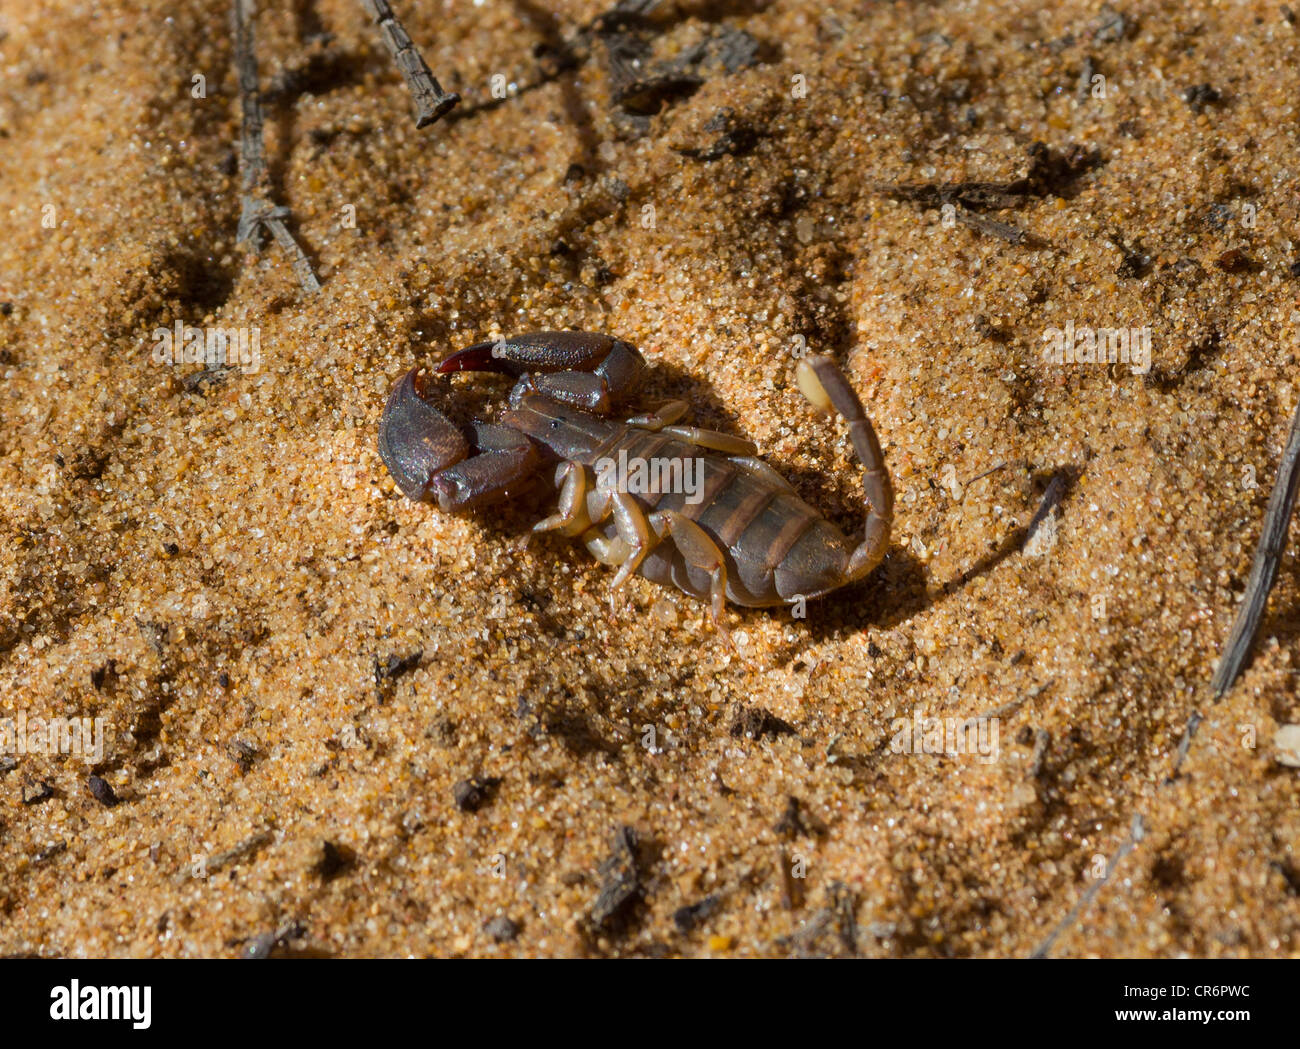 Opisthacanthus madagascariensis scorpion, Bryanston, Madagascar Banque D'Images